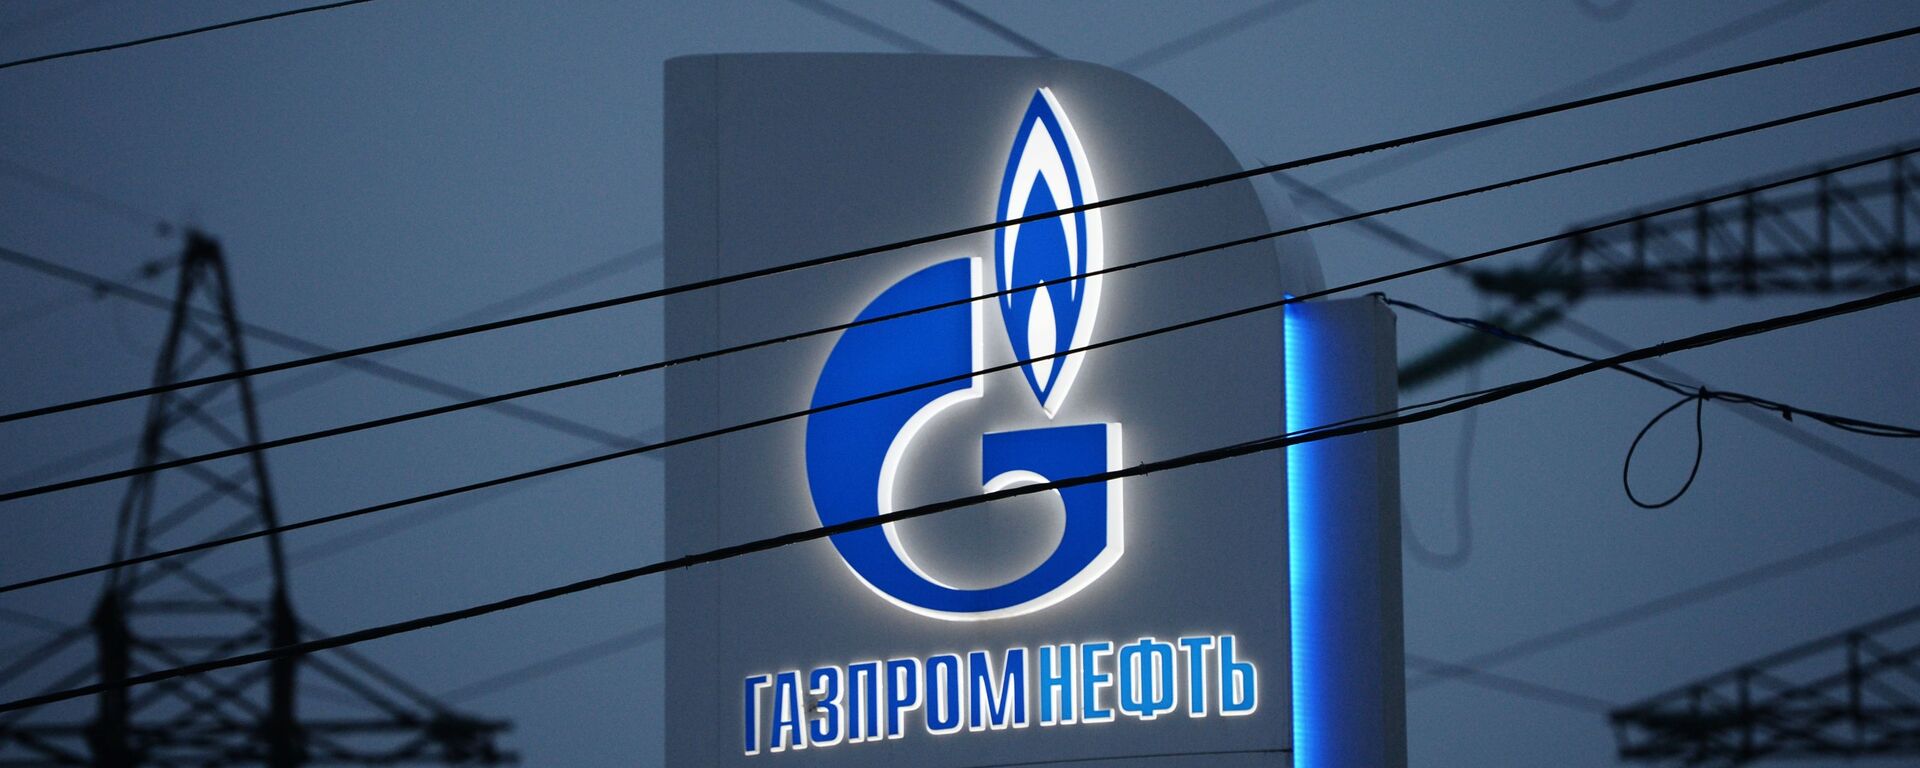 Logo de la empresa rusa Gazprom Neft - Sputnik Mundo, 1920, 16.06.2020